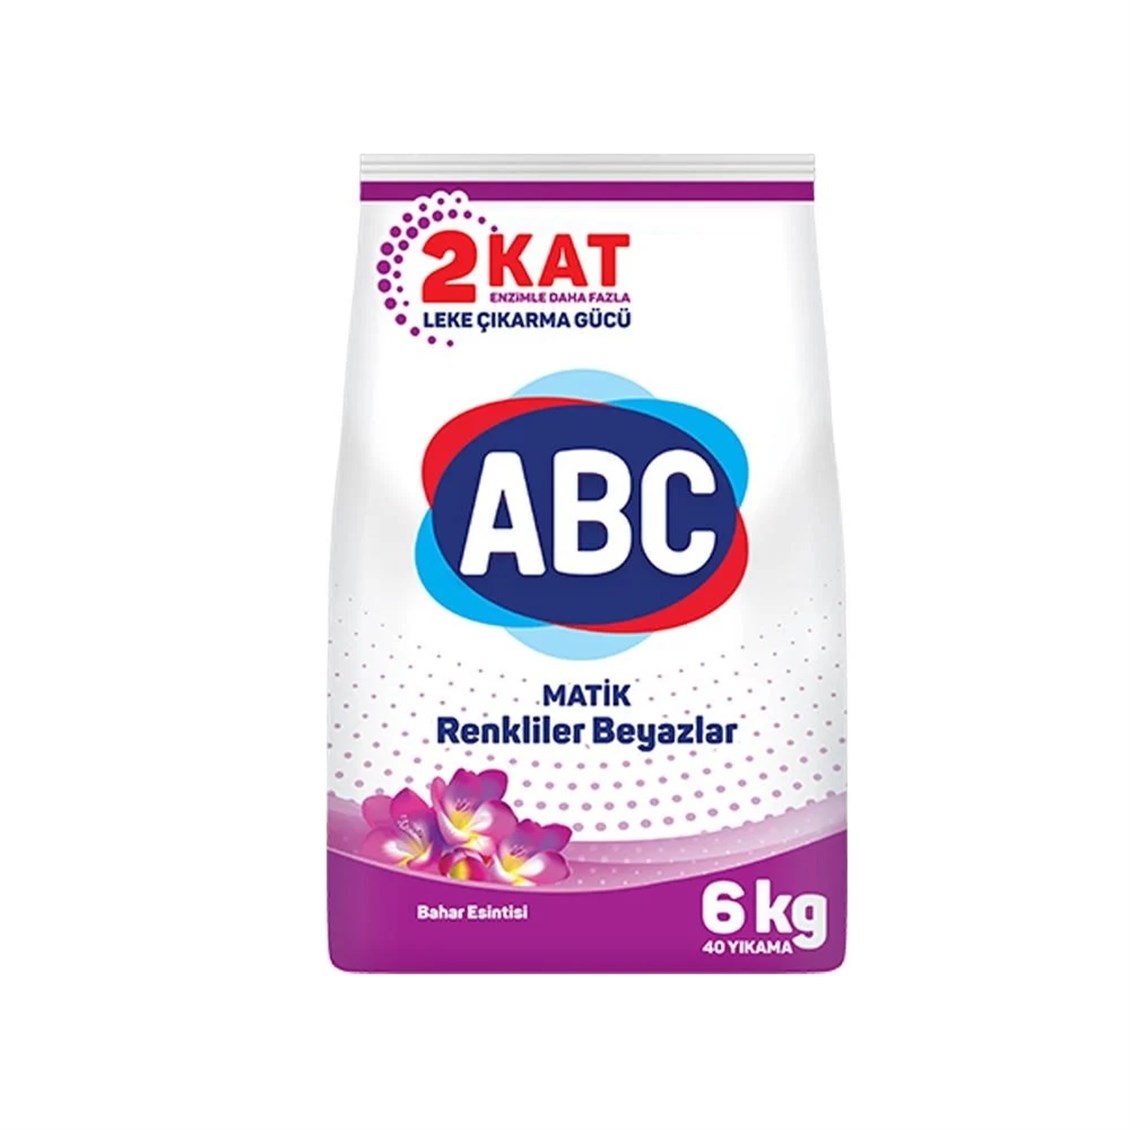 ABC Toz Deterjanı Matik Bahar Esintisi 6 kg - Onur Market